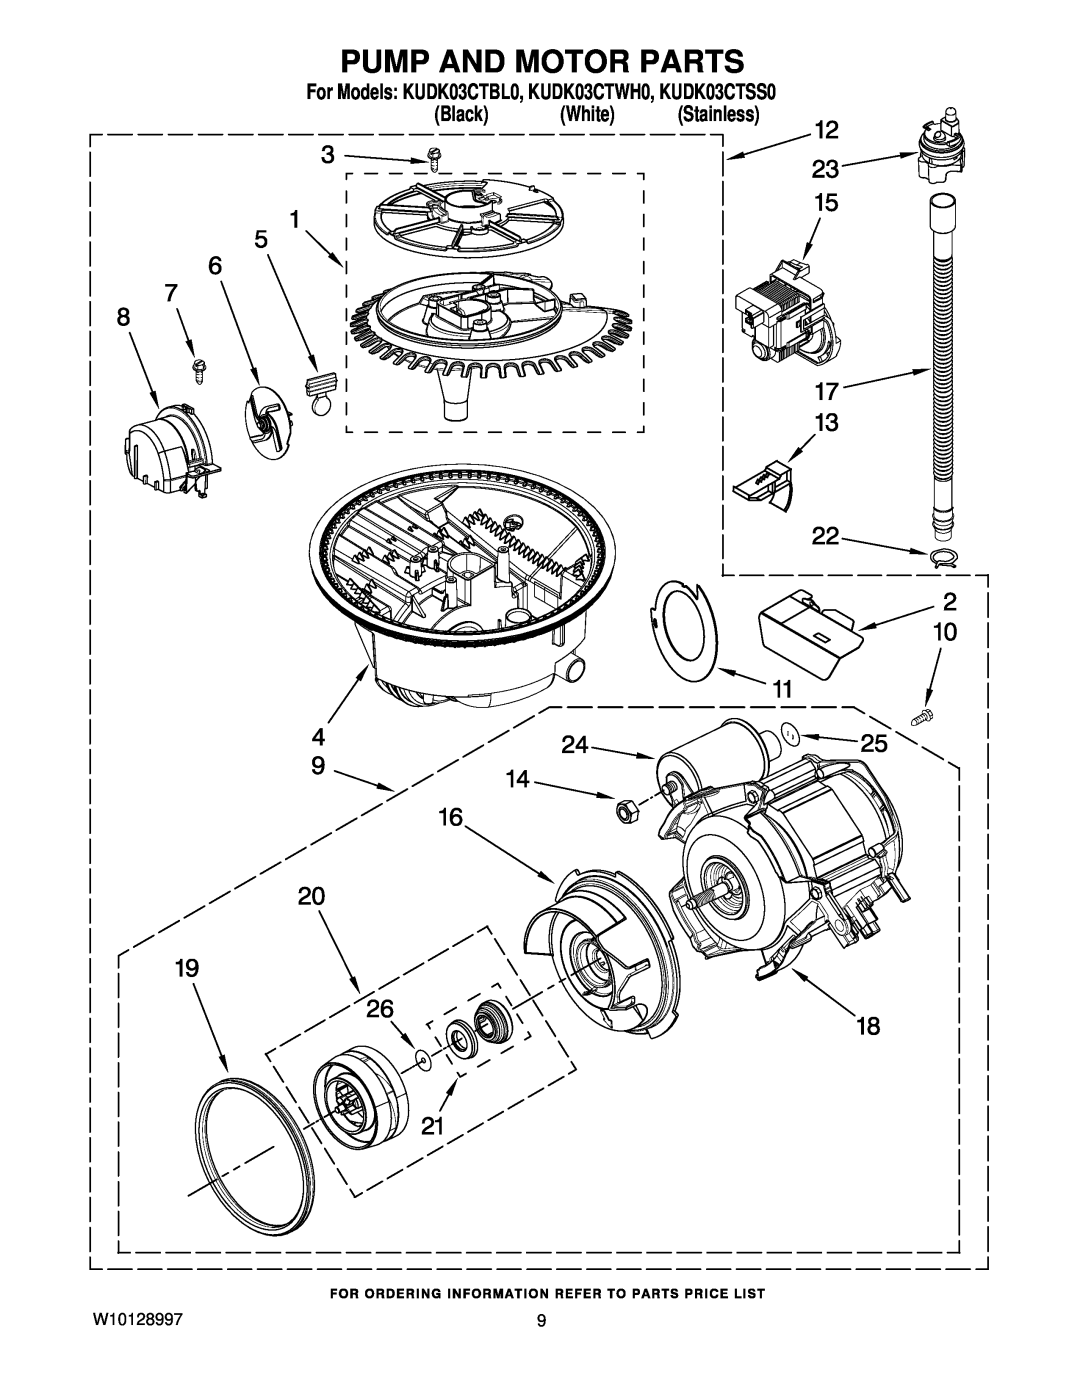 KitchenAid manual Pump And Motor Parts, For Models KUDK03CTBL0, KUDK03CTWH0, KUDK03CTSS0, Black White Stainless 